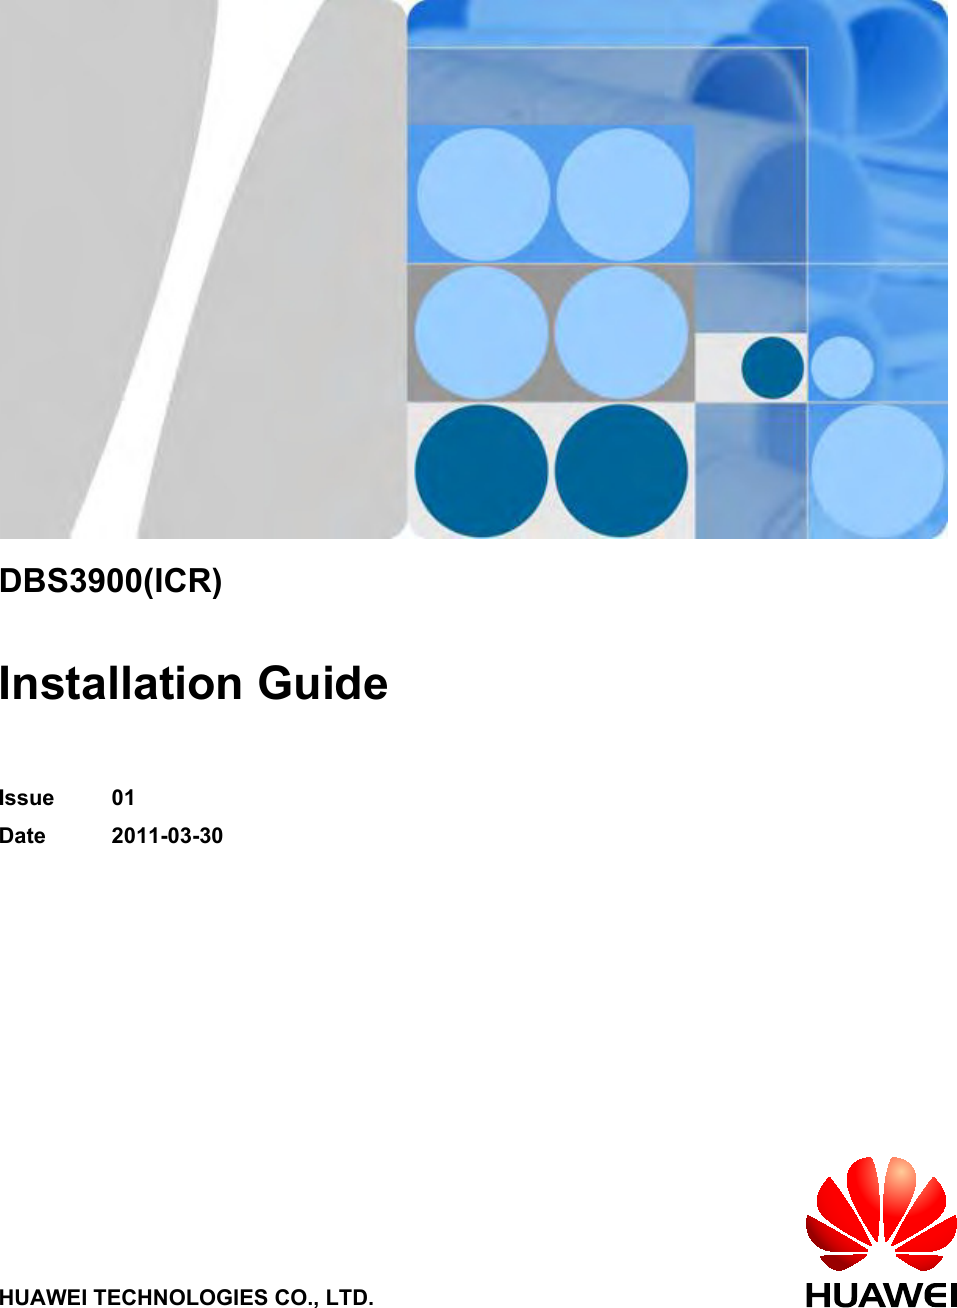 DBS3900(ICR)Installation GuideIssue 01Date 2011-03-30HUAWEI TECHNOLOGIES CO., LTD.